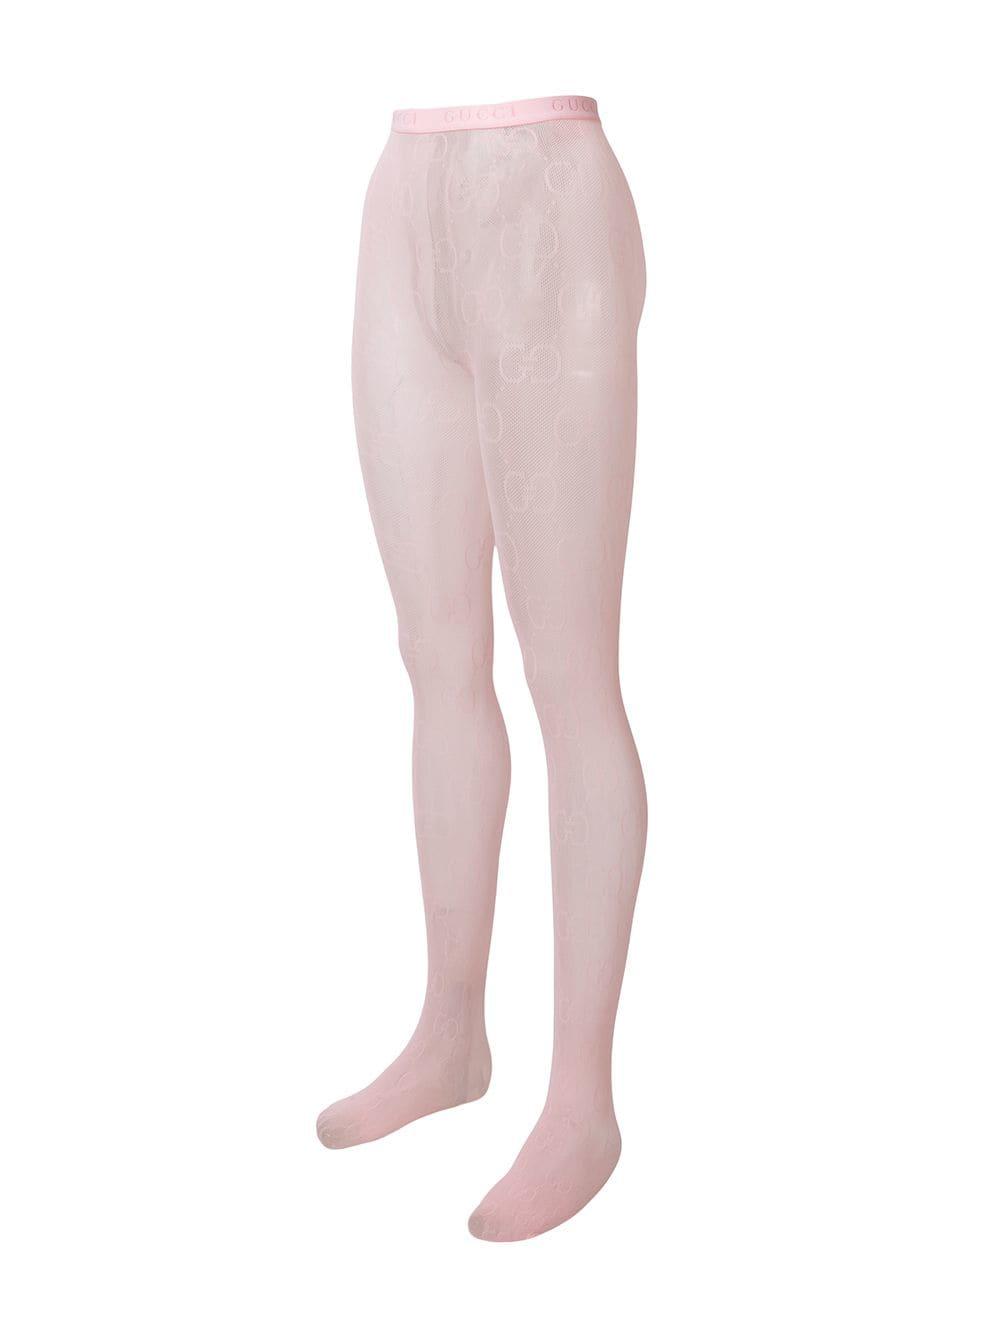 pink gucci tights